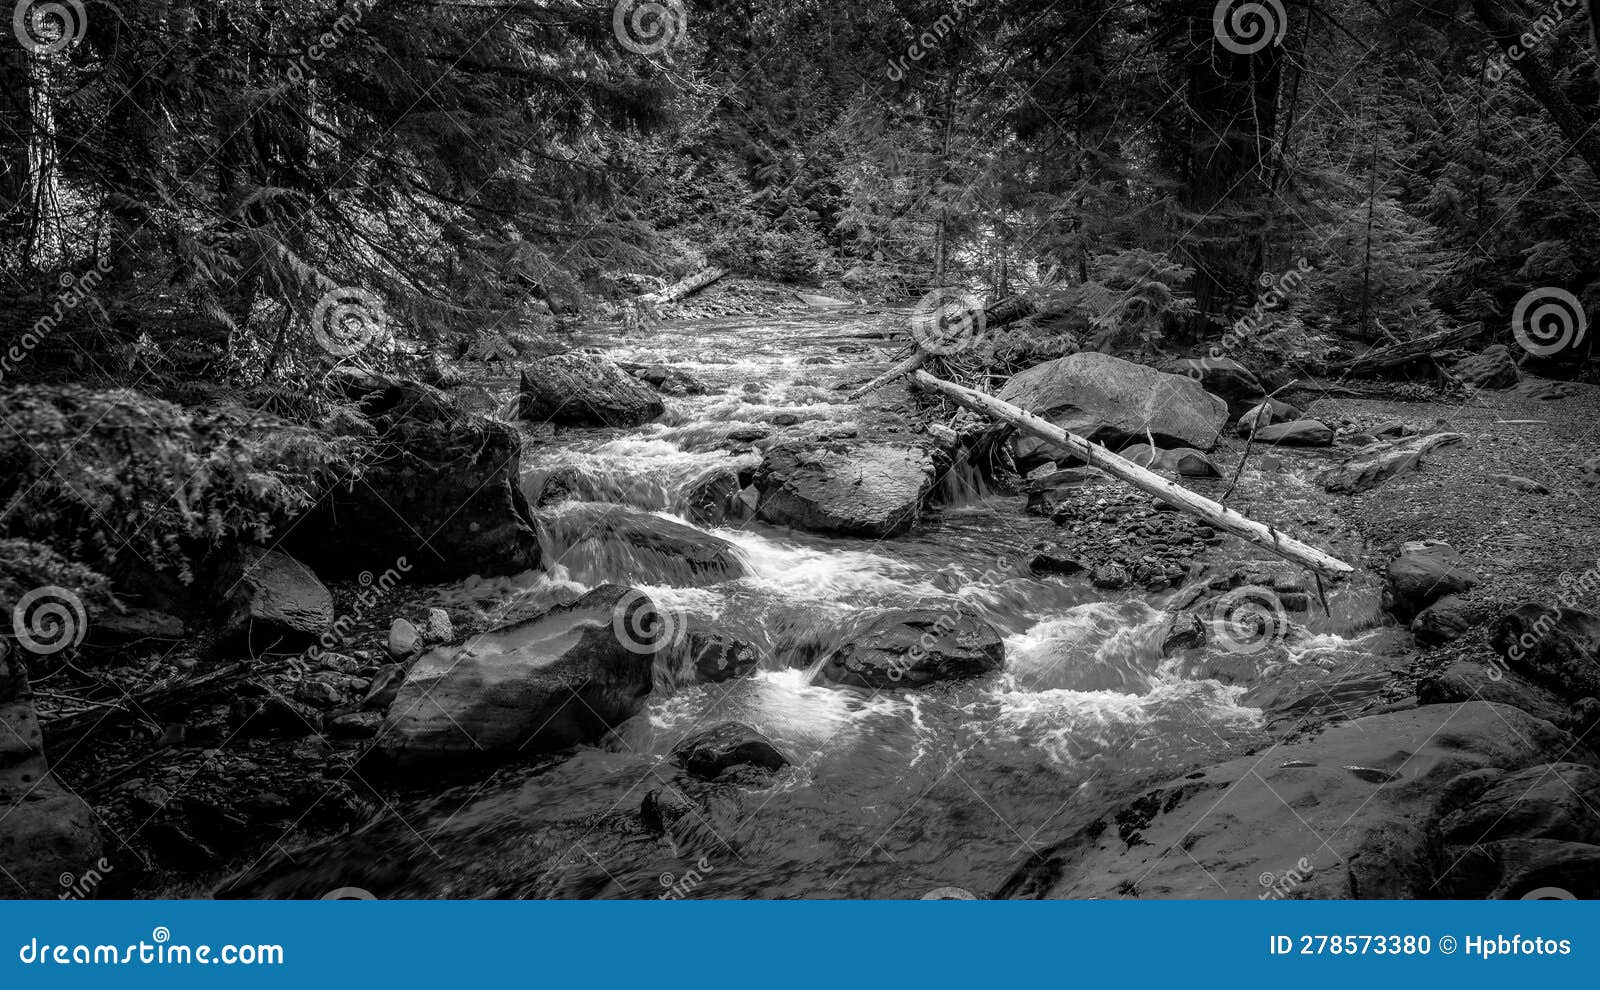 black and white photo of avalance creek